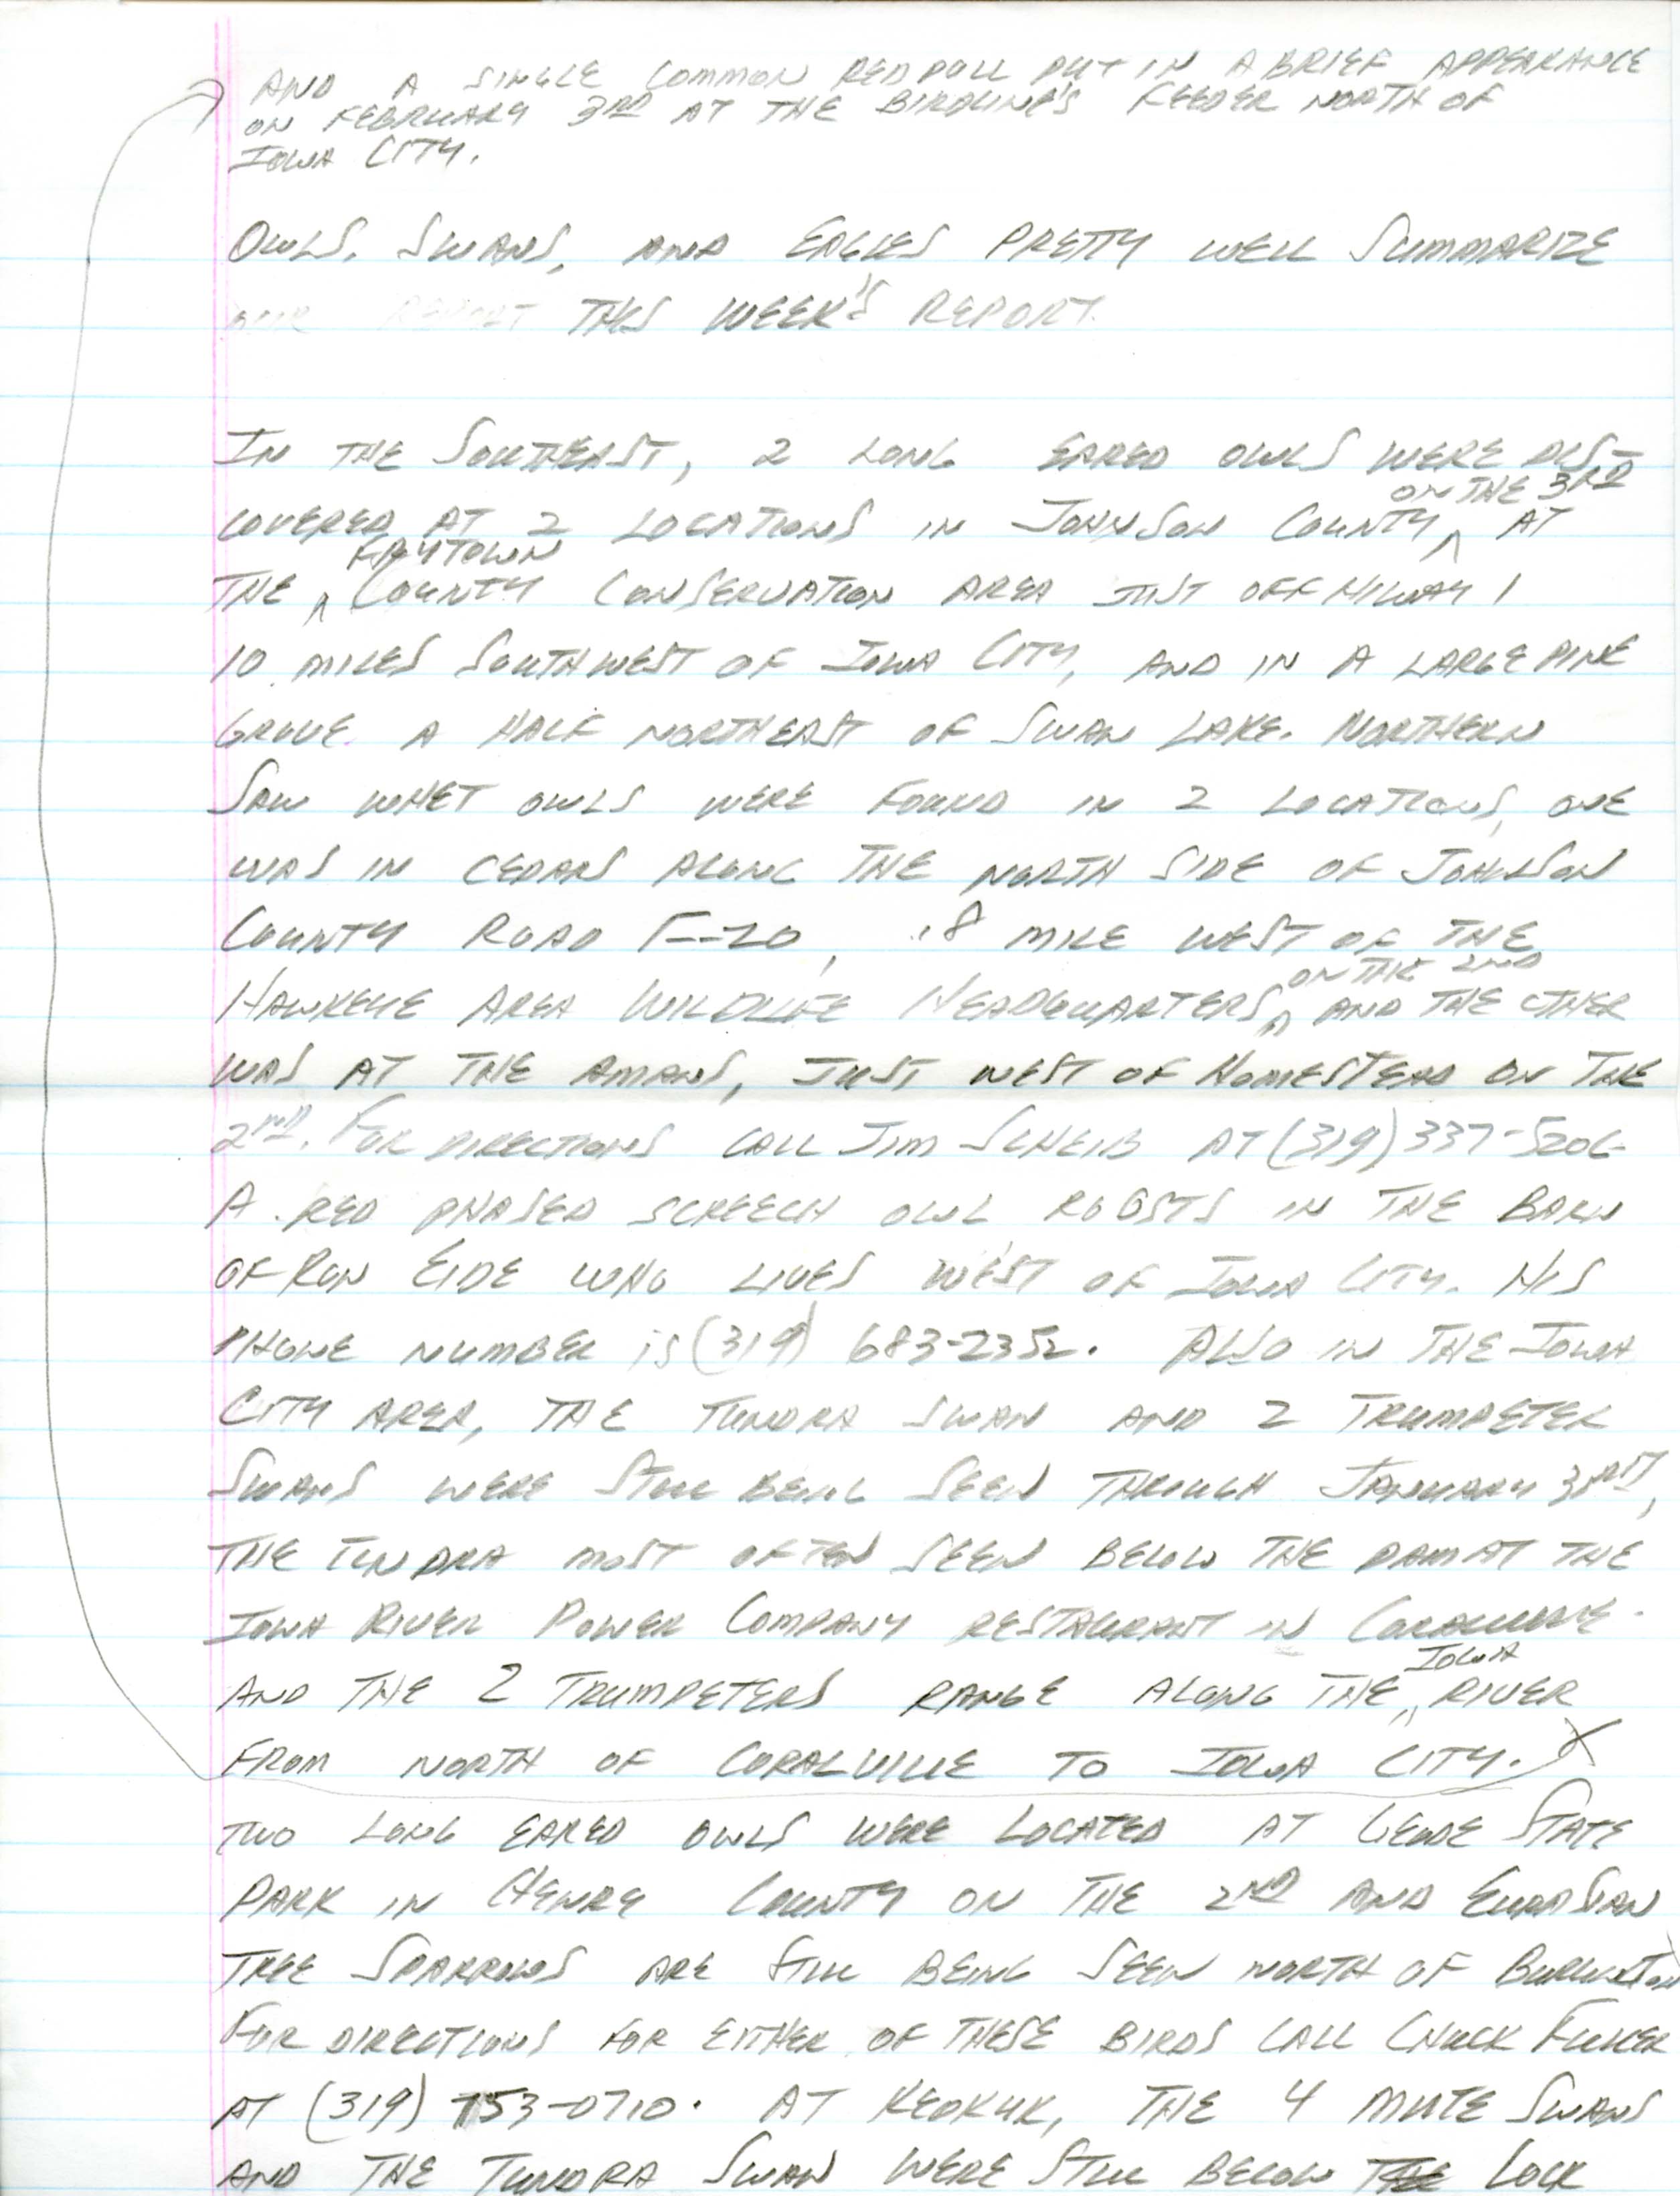 Iowa Birdline update, February 4, 1991 notes